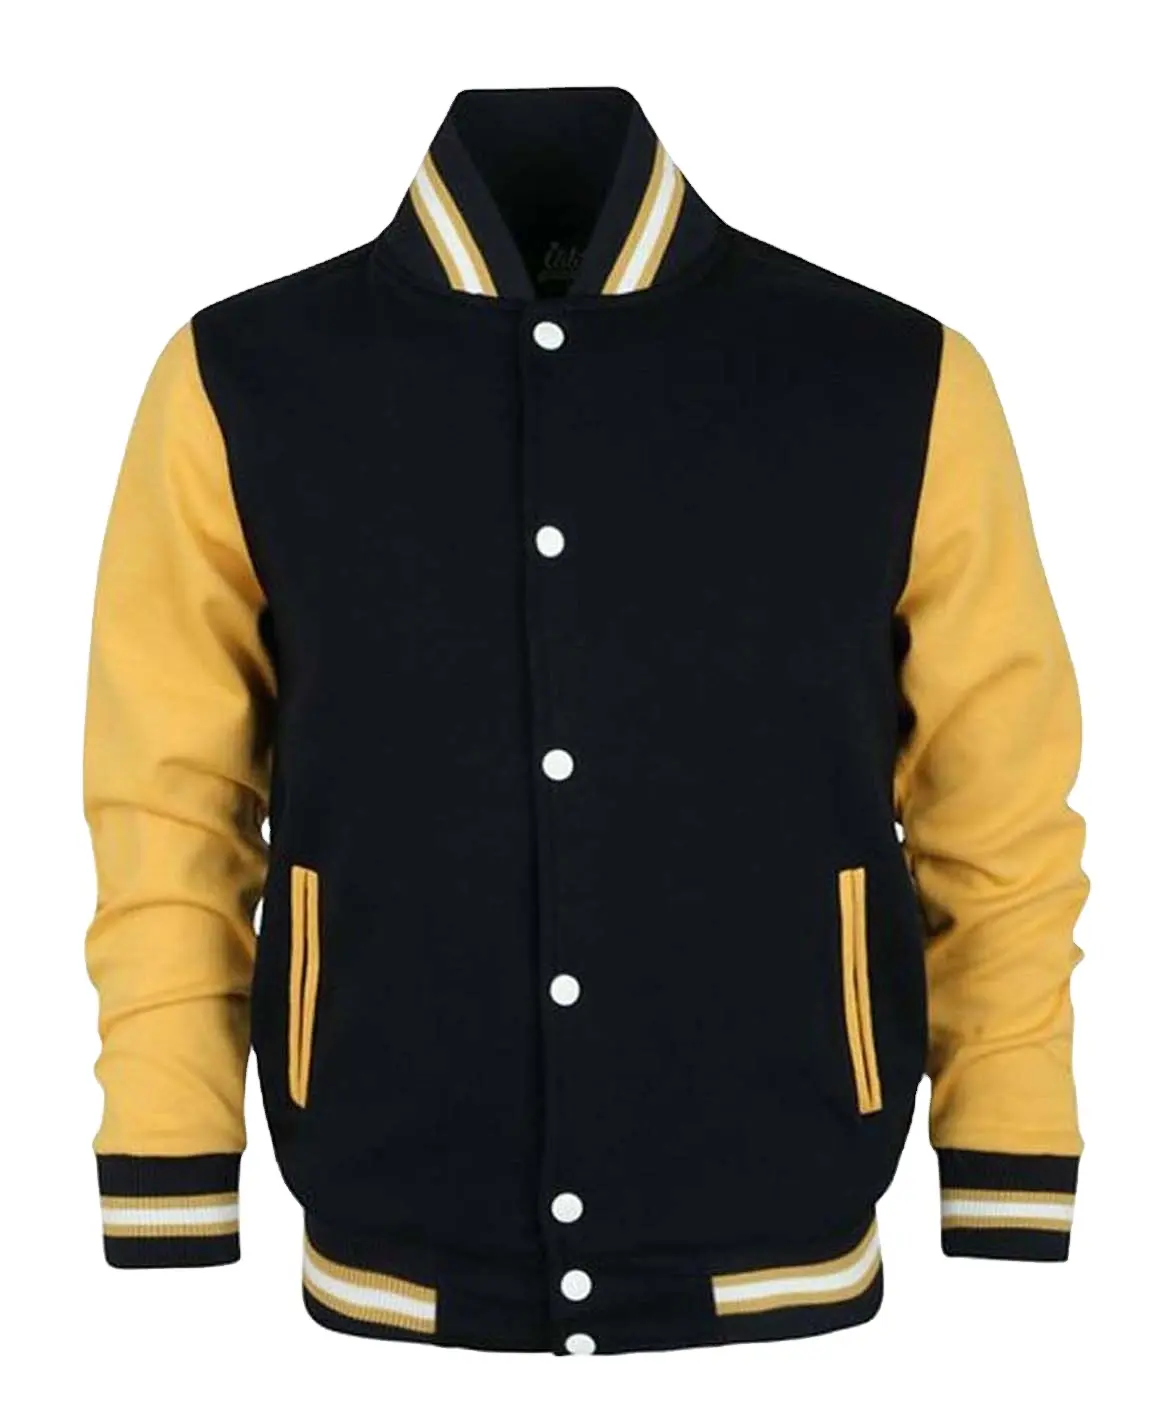 Custom Design Jacket Long Sleeves Unisex Sport Wear Fleece Varasity Jackets plus size winter varasity jackets